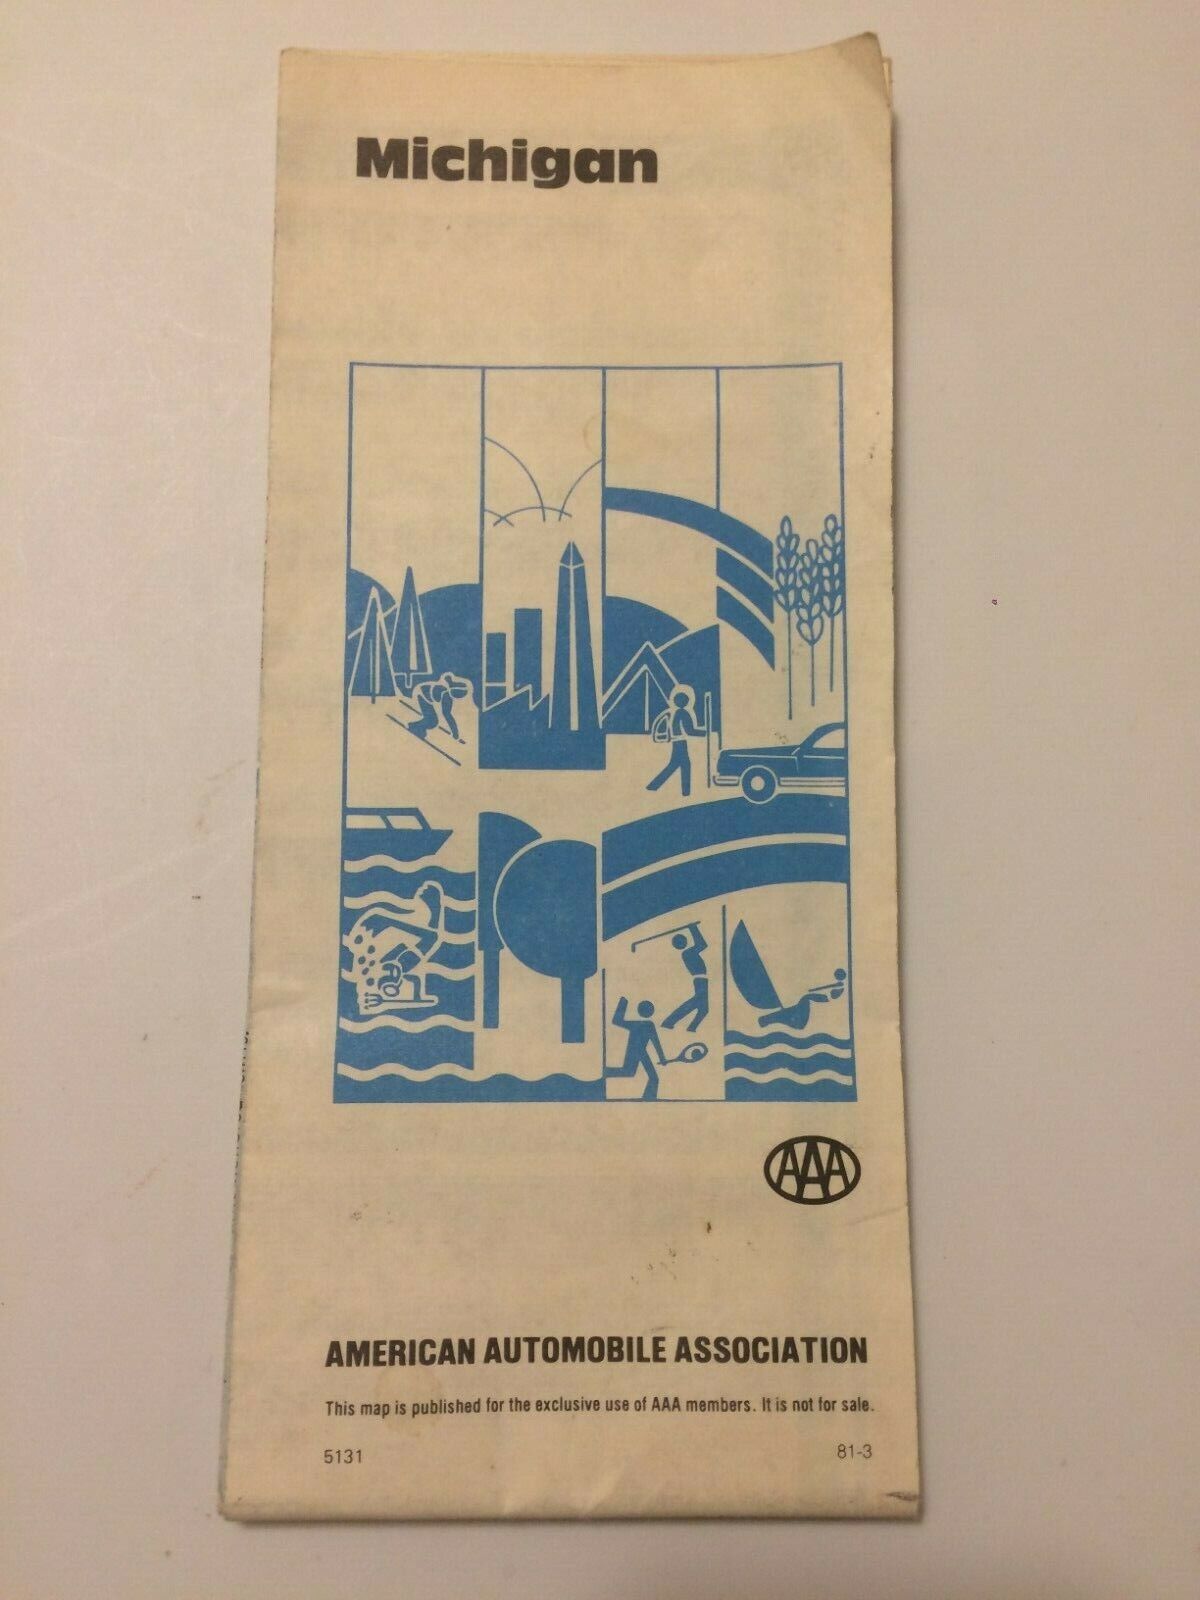 Vintage 1981 AAA Michigan Road Map American Automobile Association 81-3 Retro